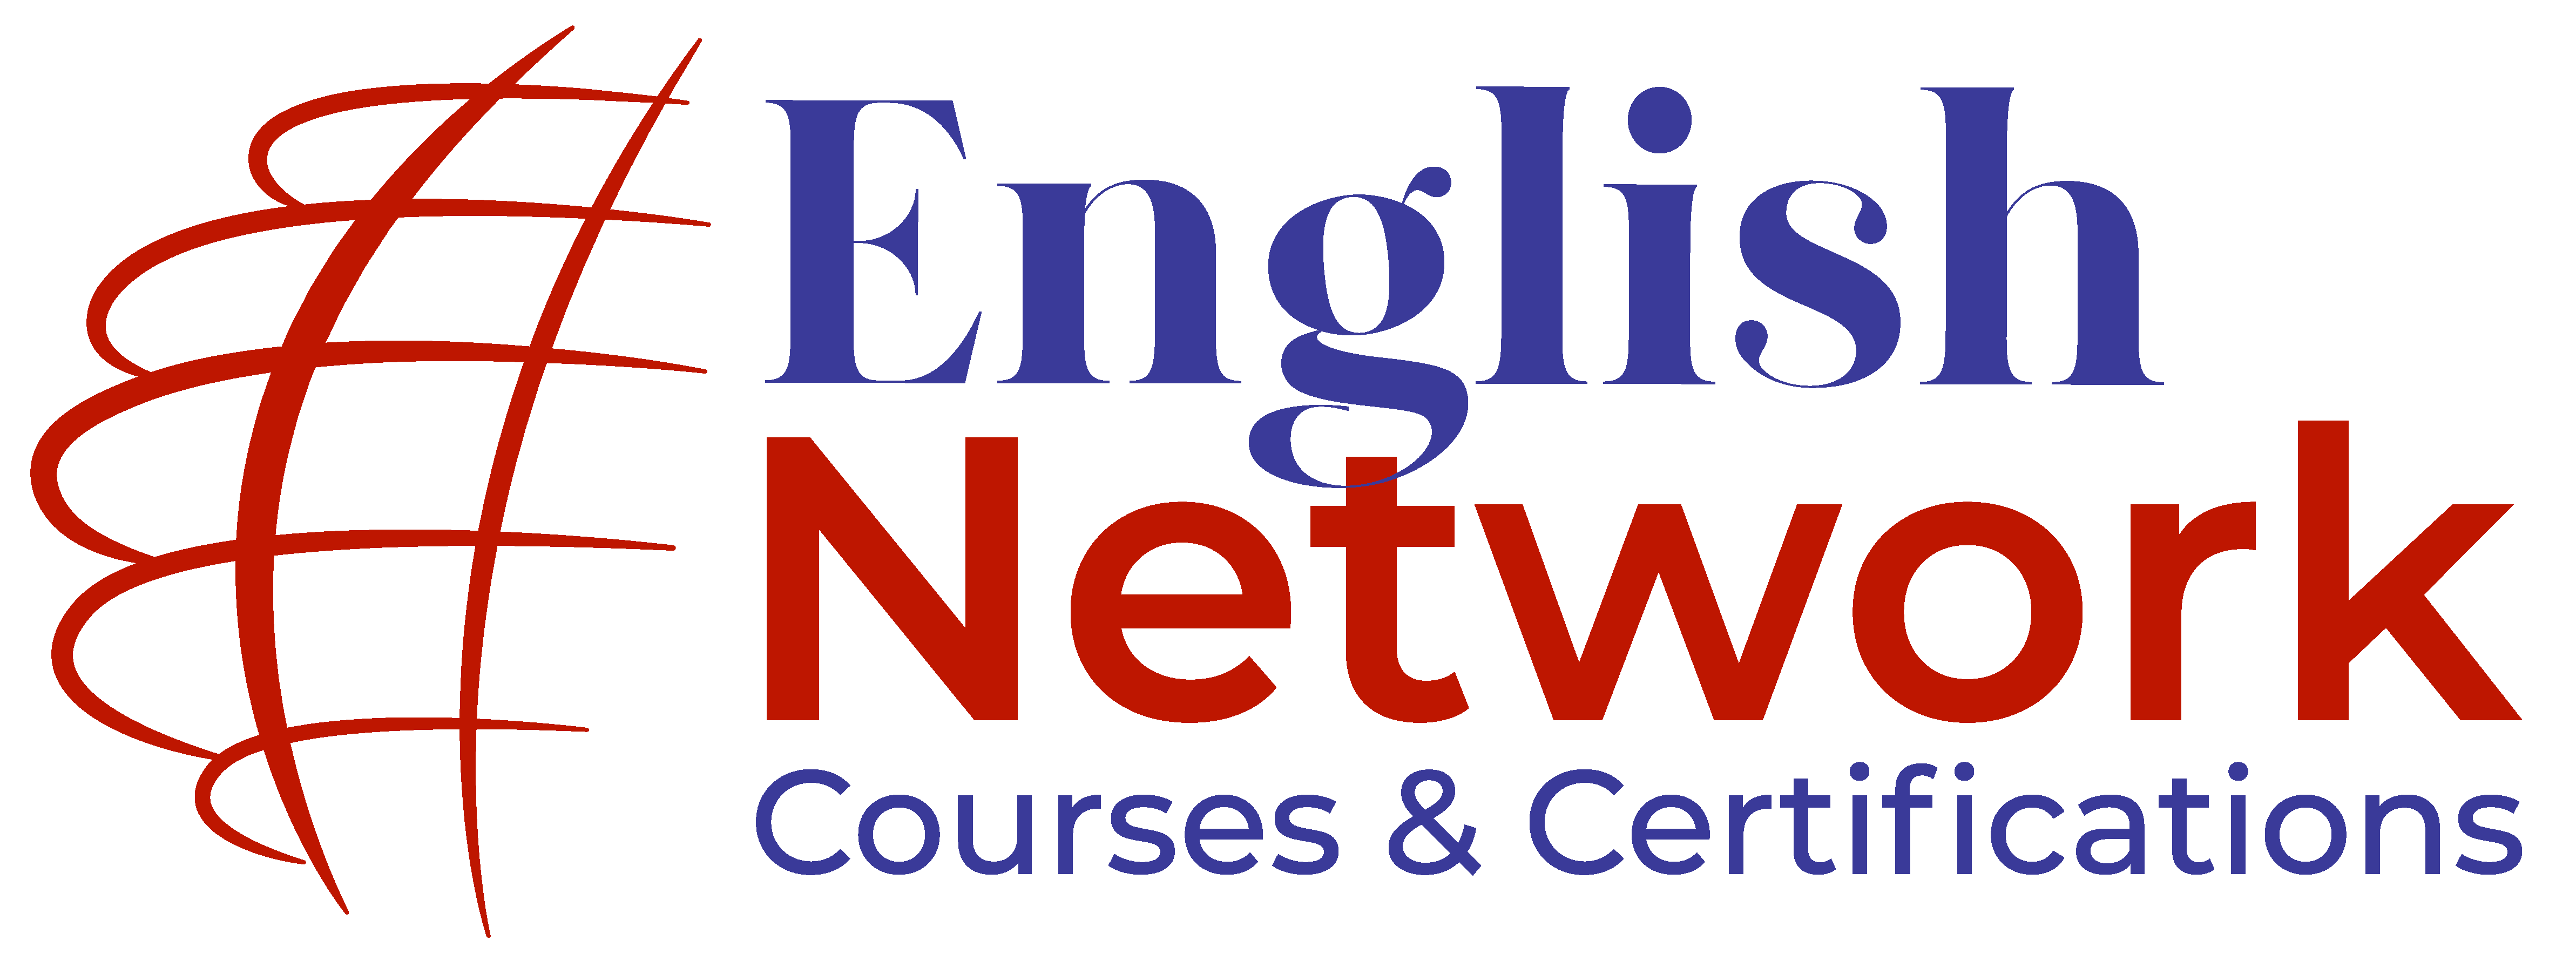 English Network